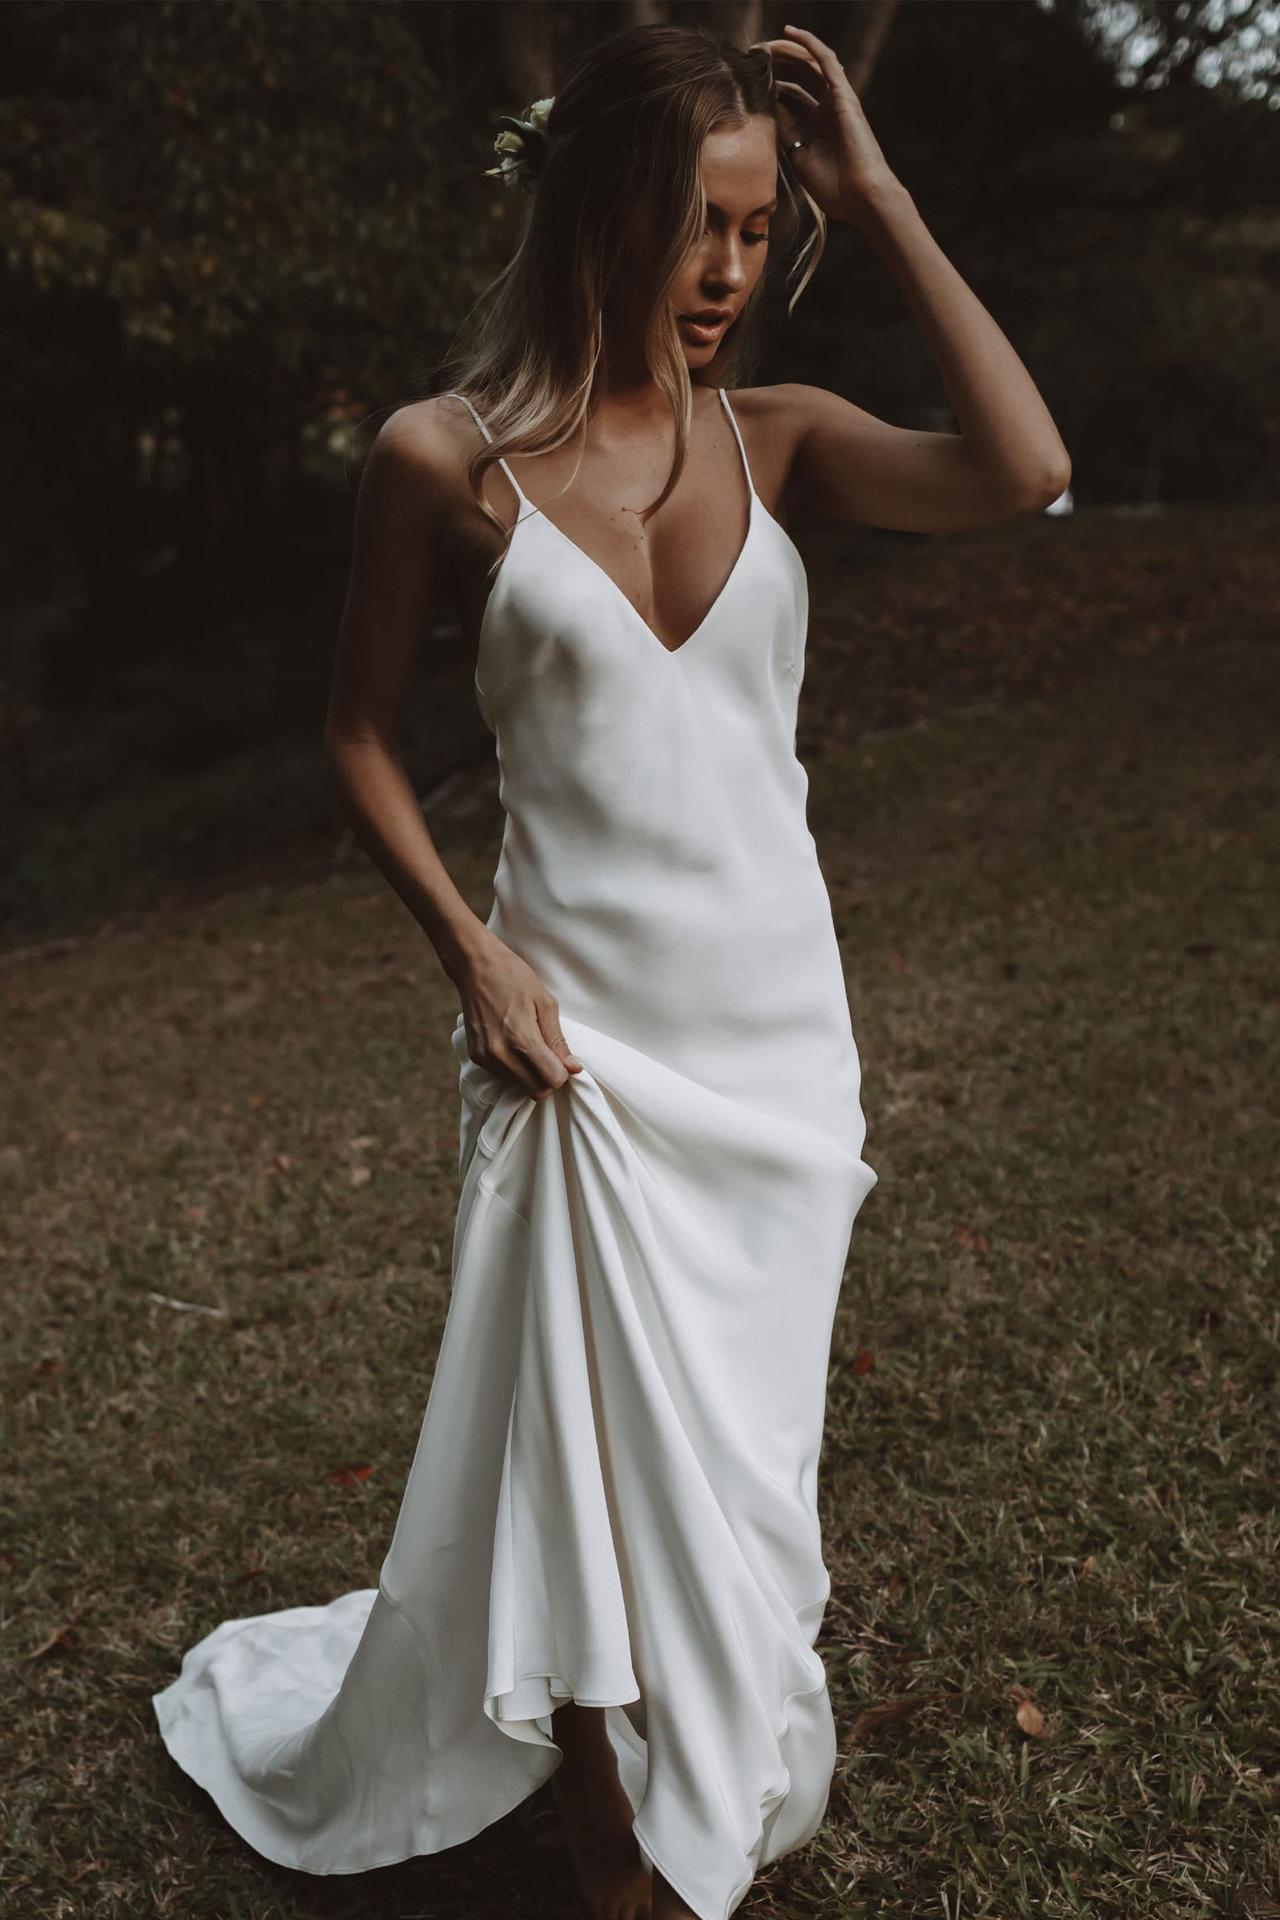 Designer Creates Illusion Wedding Gowns for Black Women